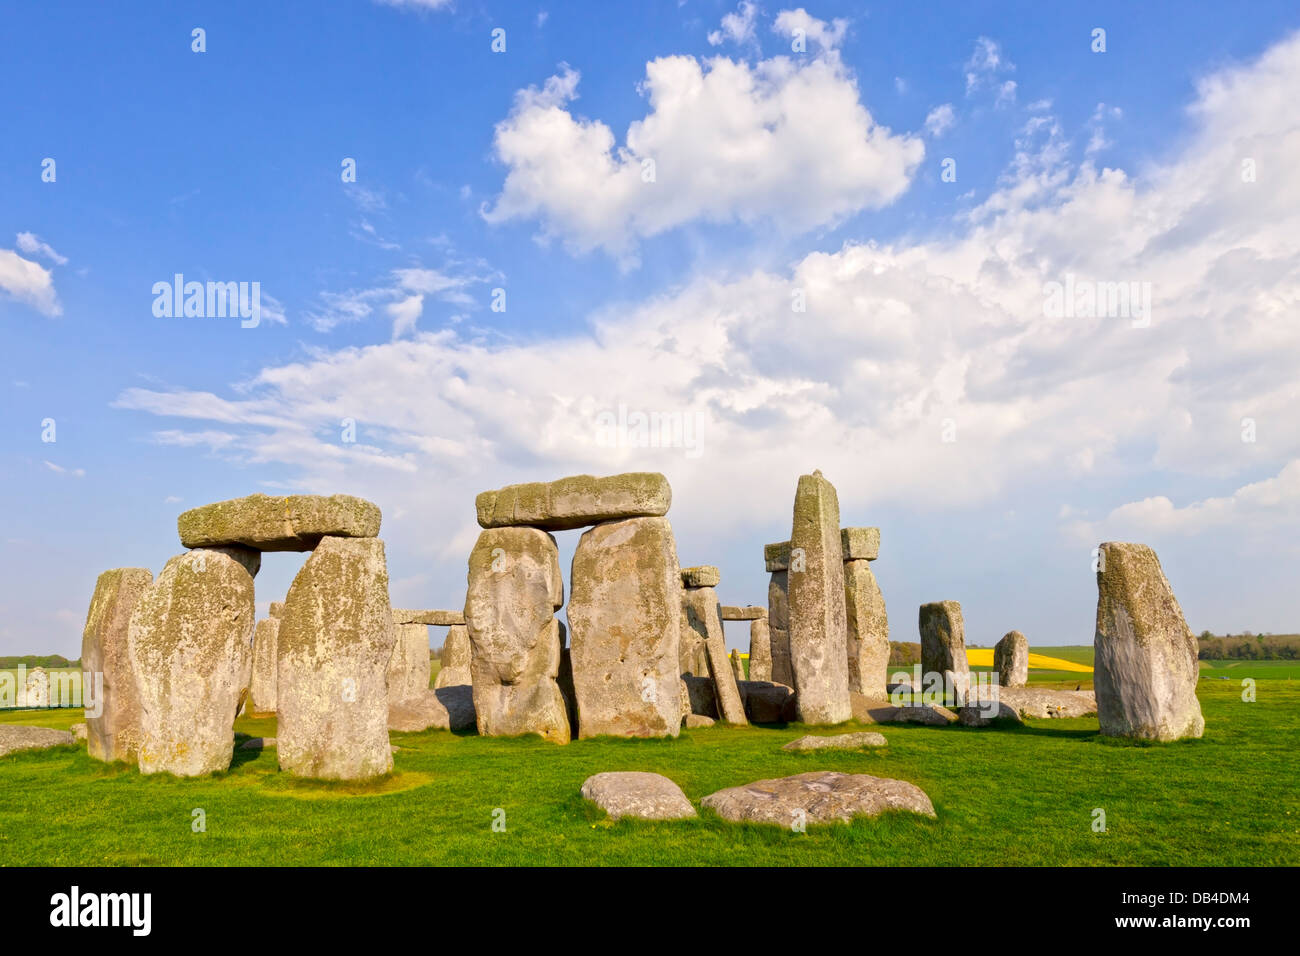 Stonehenge Stone Circle, Wiltshire, England - die berühmten Megalith-Monument Stonehenge in Wiltshire... Stockfoto